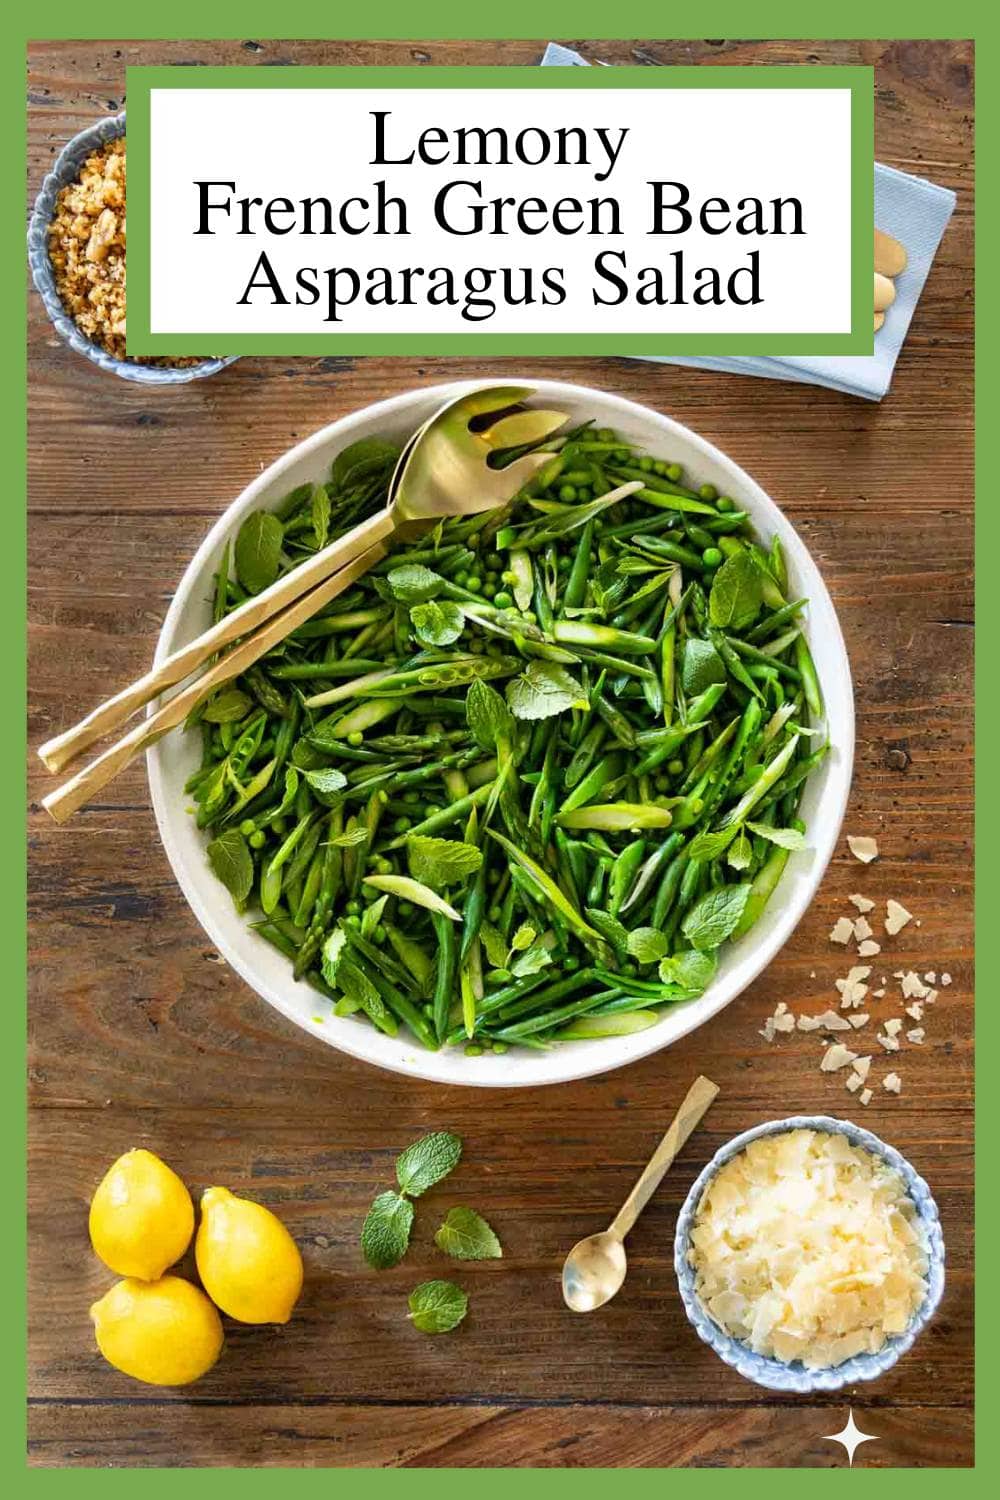 Lemony French Green Bean Asparagus Salad